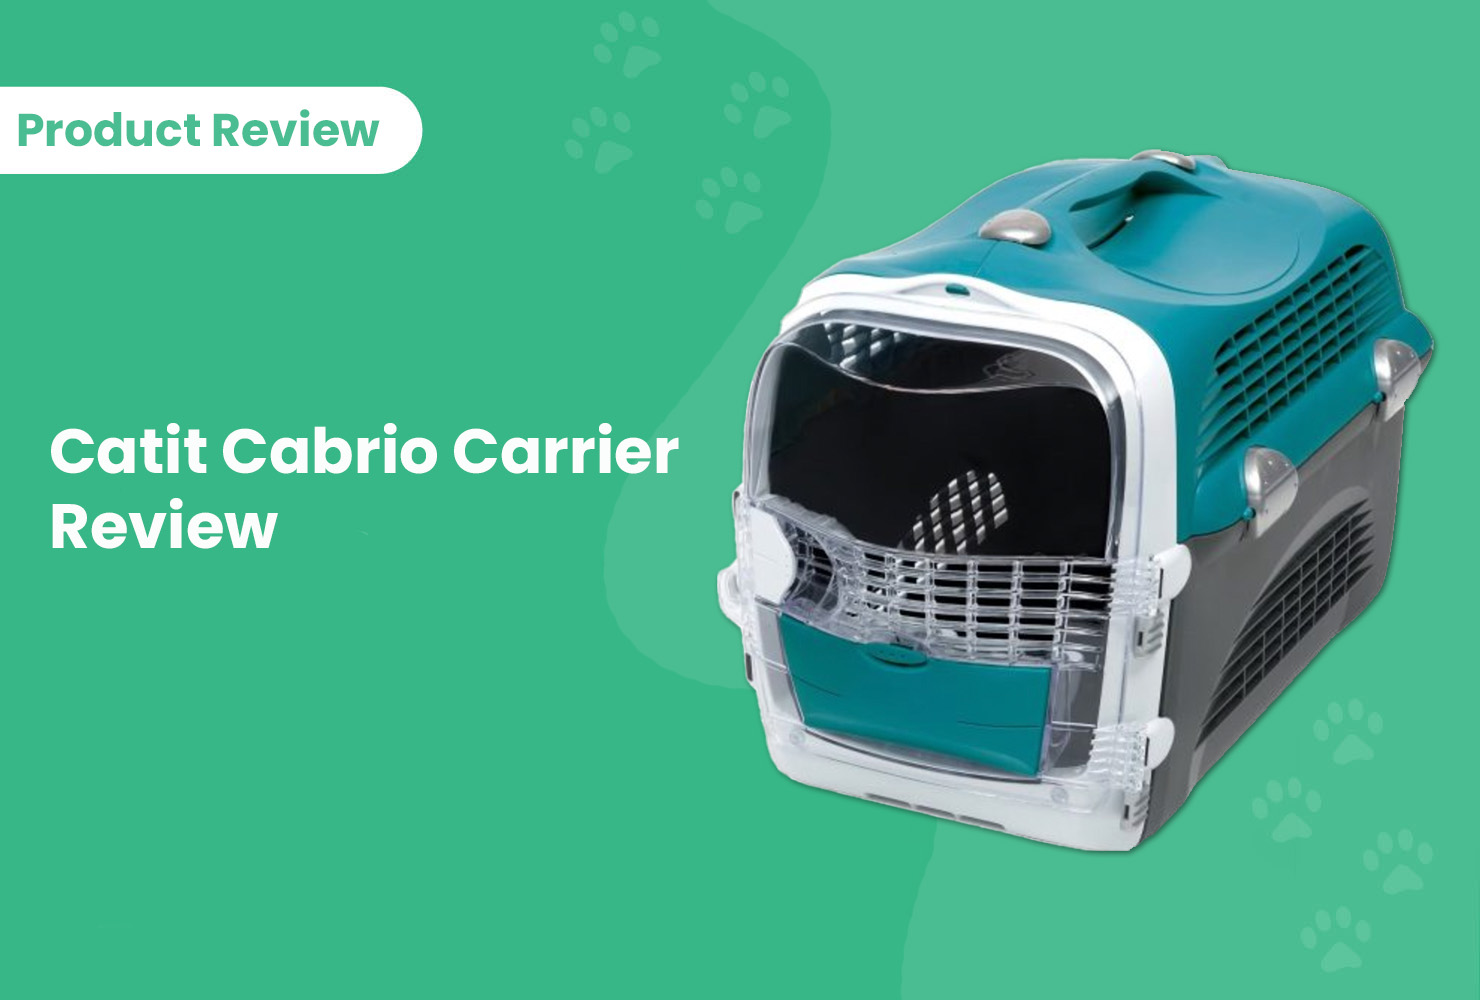 Catit Cabrio Carrier Review